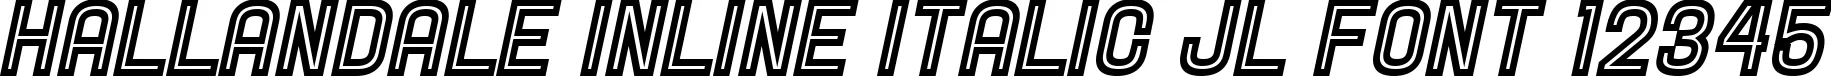 Dynamic Hallandale Inline Italic JL Font Preview https://safirsoft.com